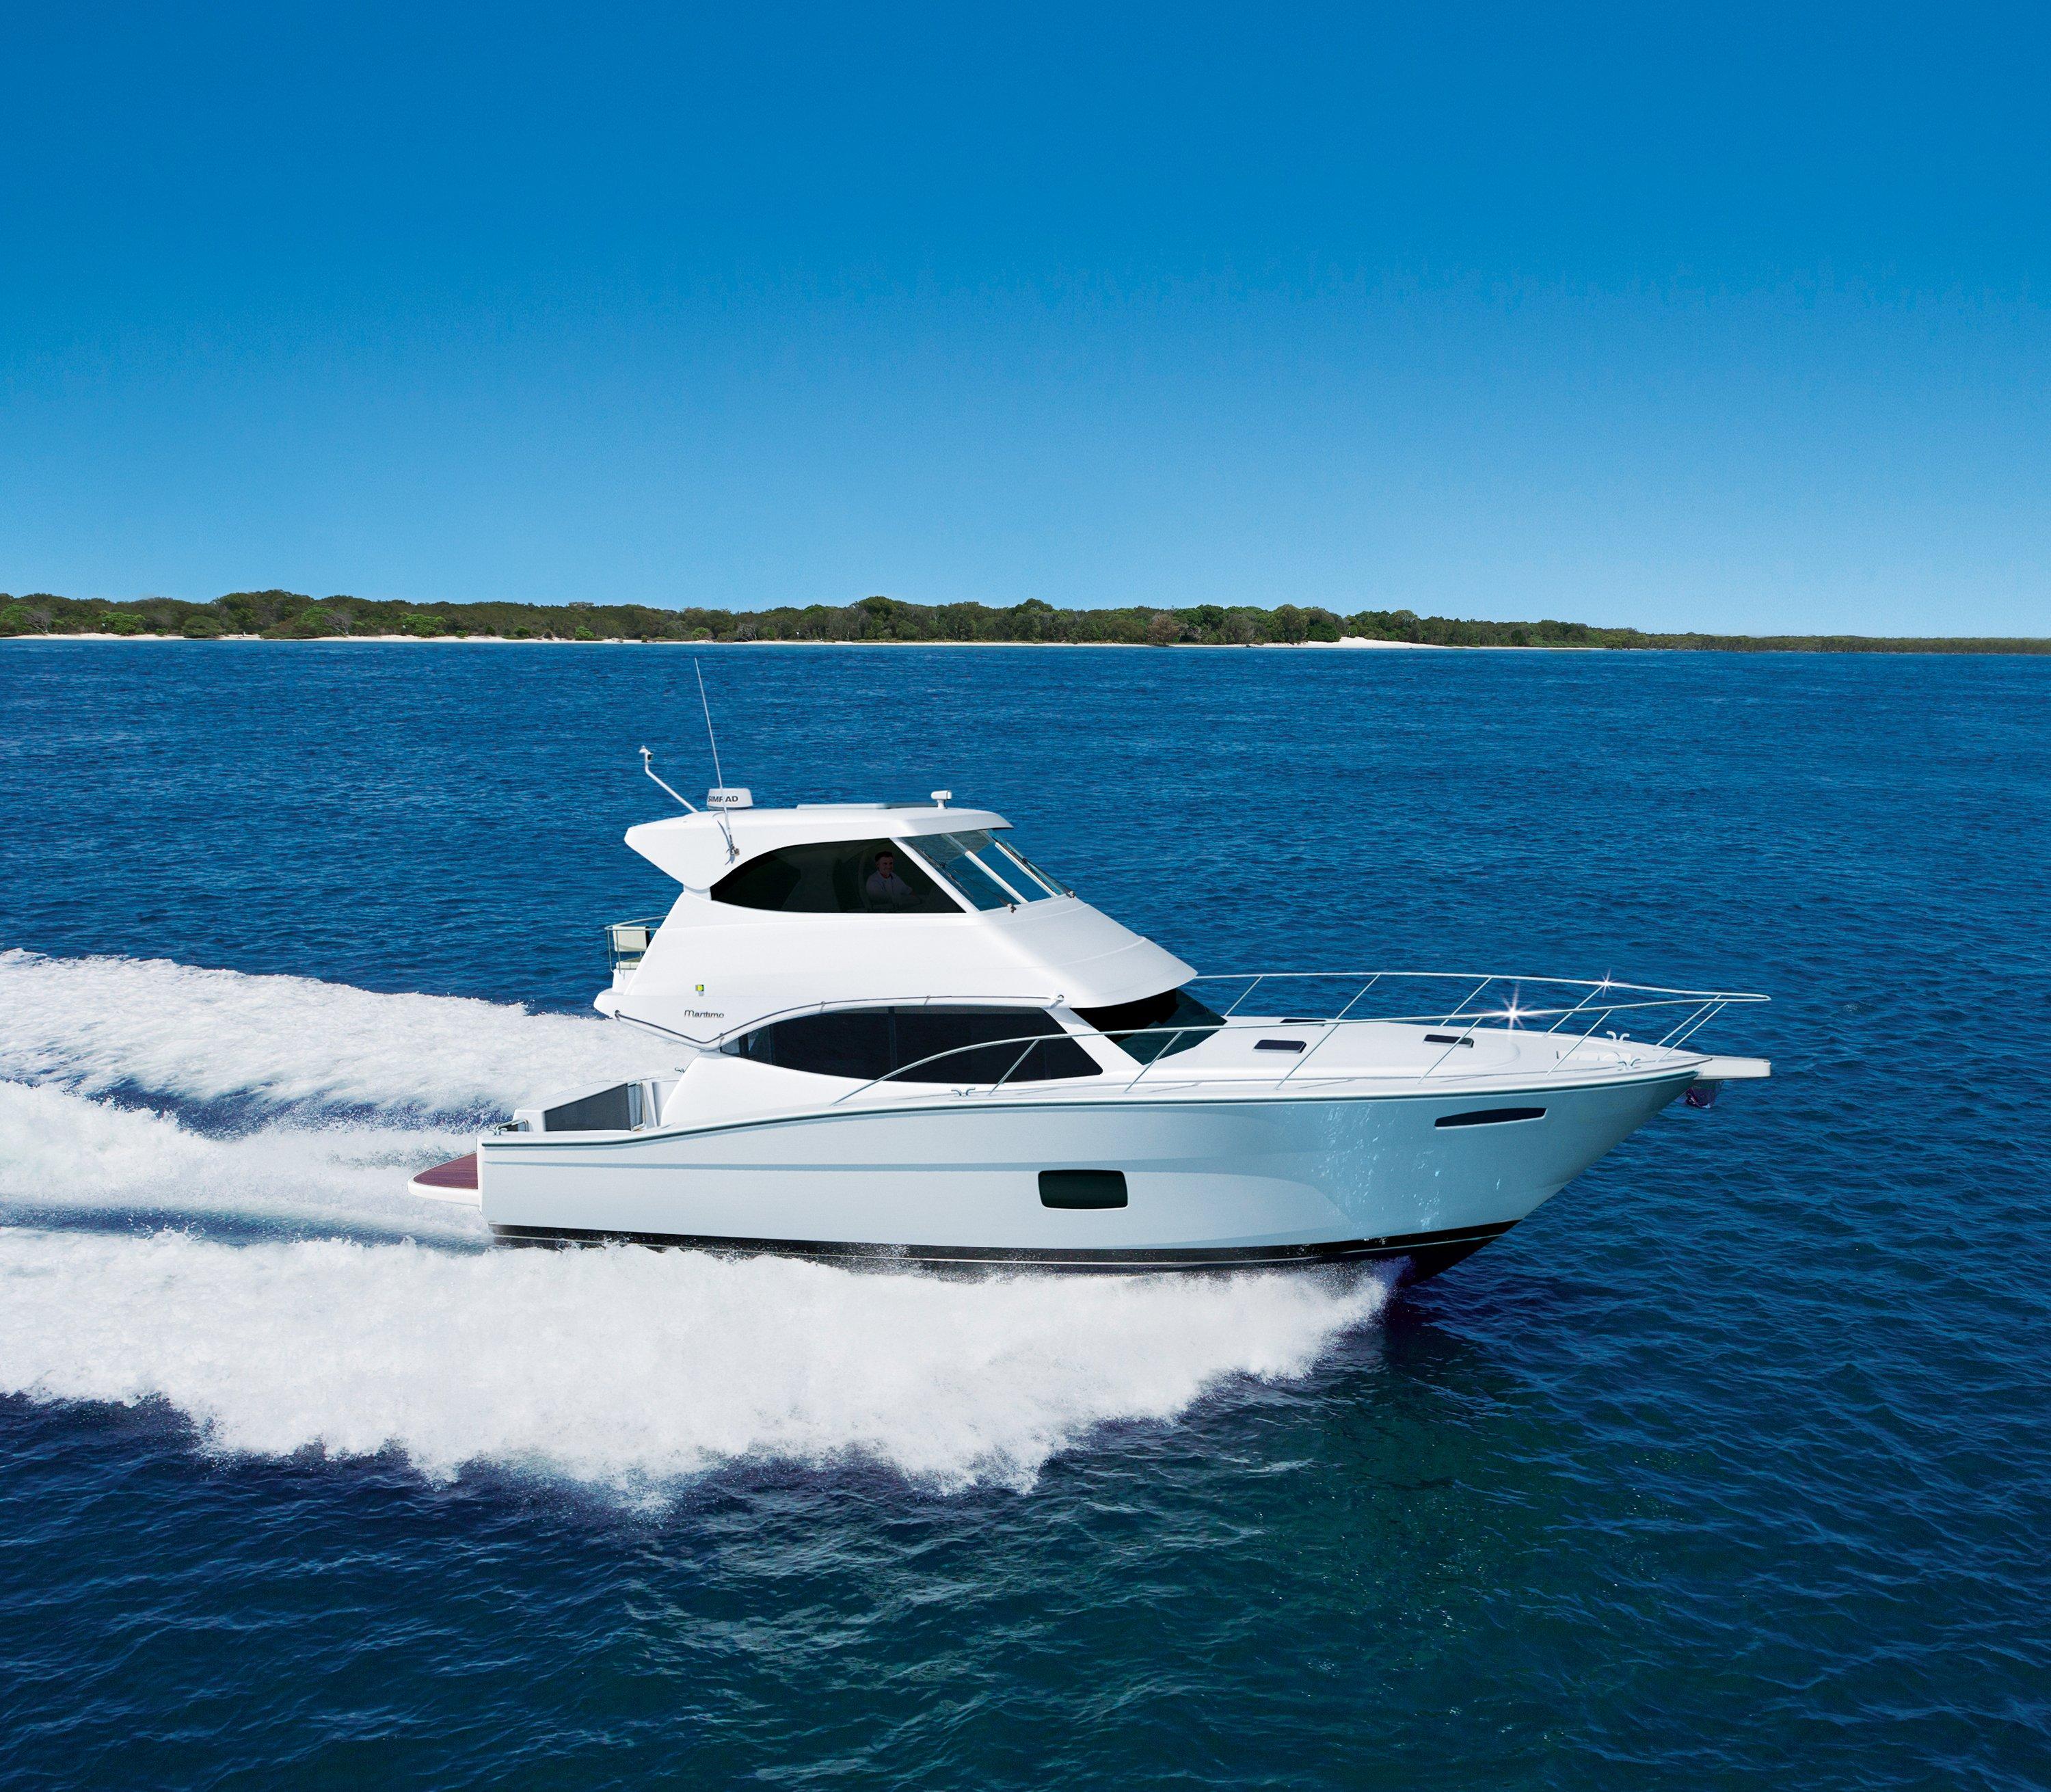 NEWS — Maritimo buoyed by interest in M45 Cruising Motor Yacht